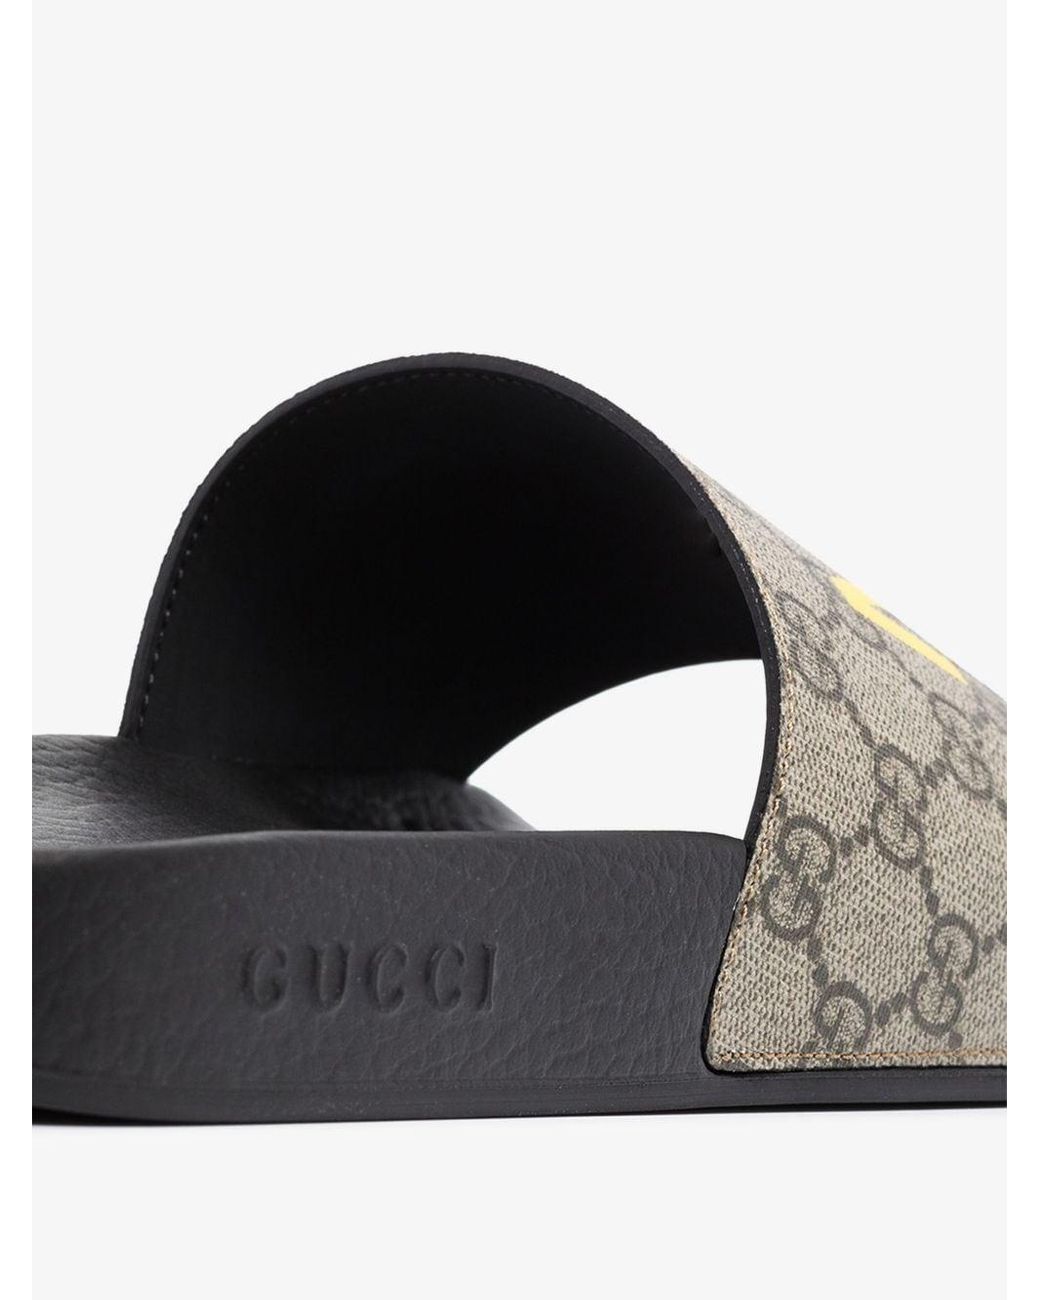 Gucci Casual Leather Shoes For Men-30, Replica Shoes | Мужские классические  туфли, Обувь для парня, Лоферы мужские